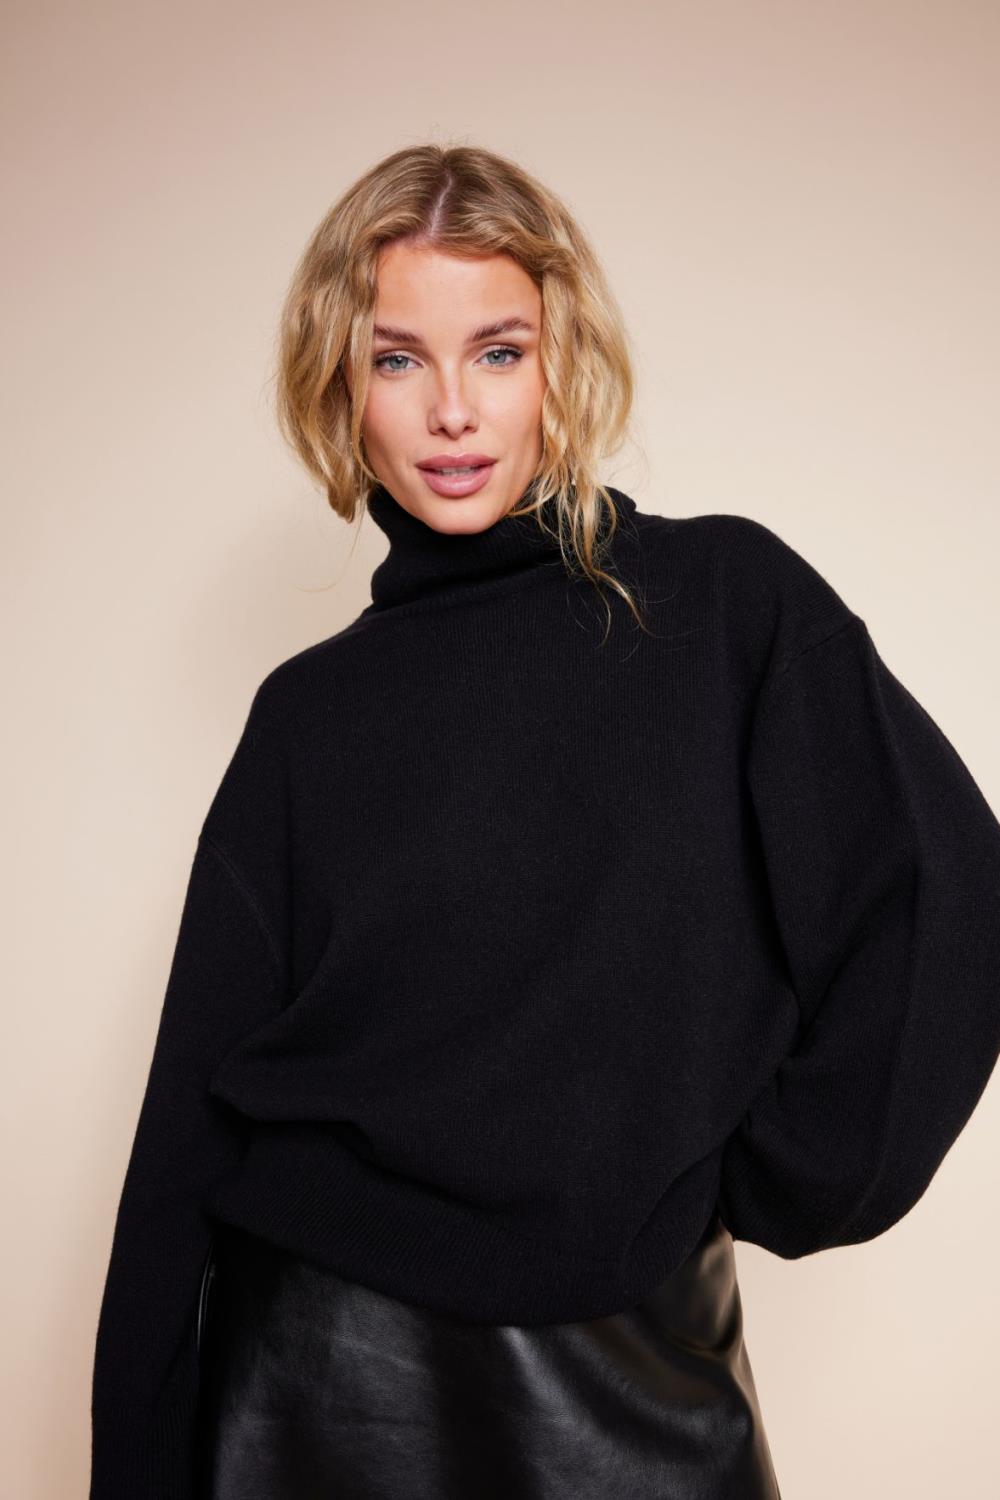 Katy solid sweater black